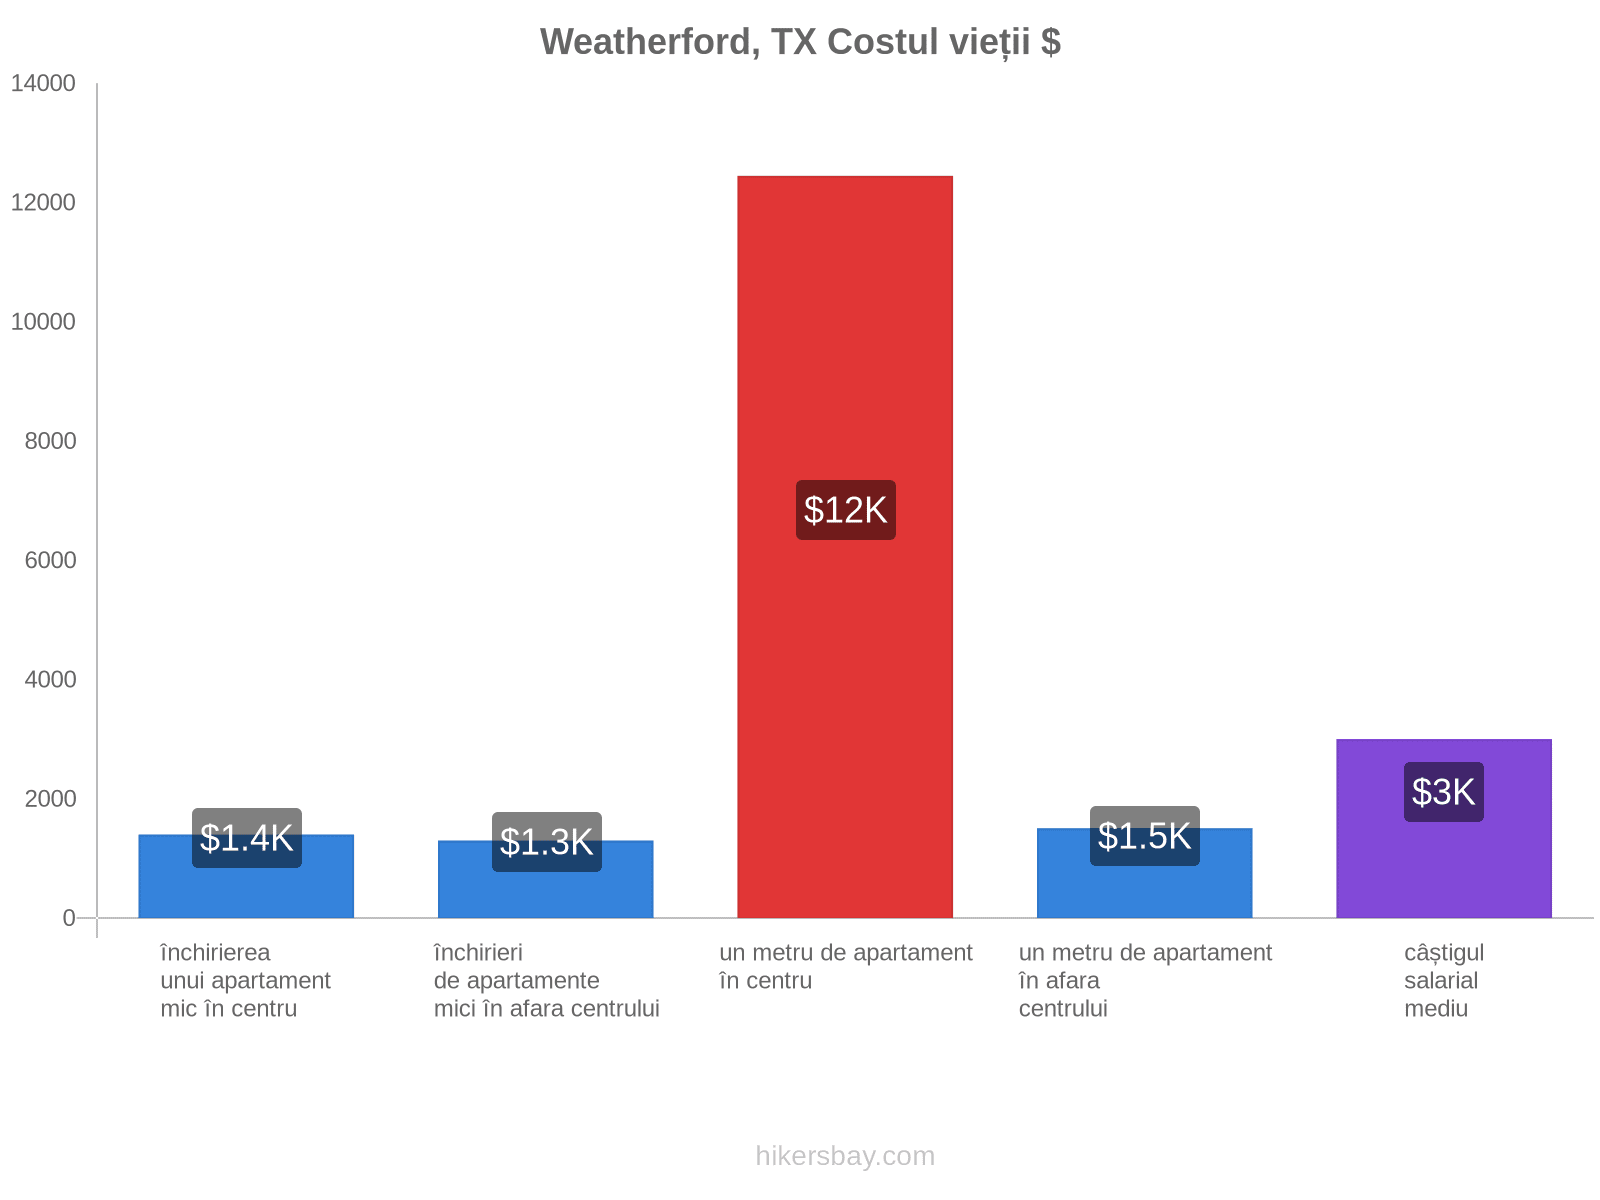 Weatherford, TX costul vieții hikersbay.com